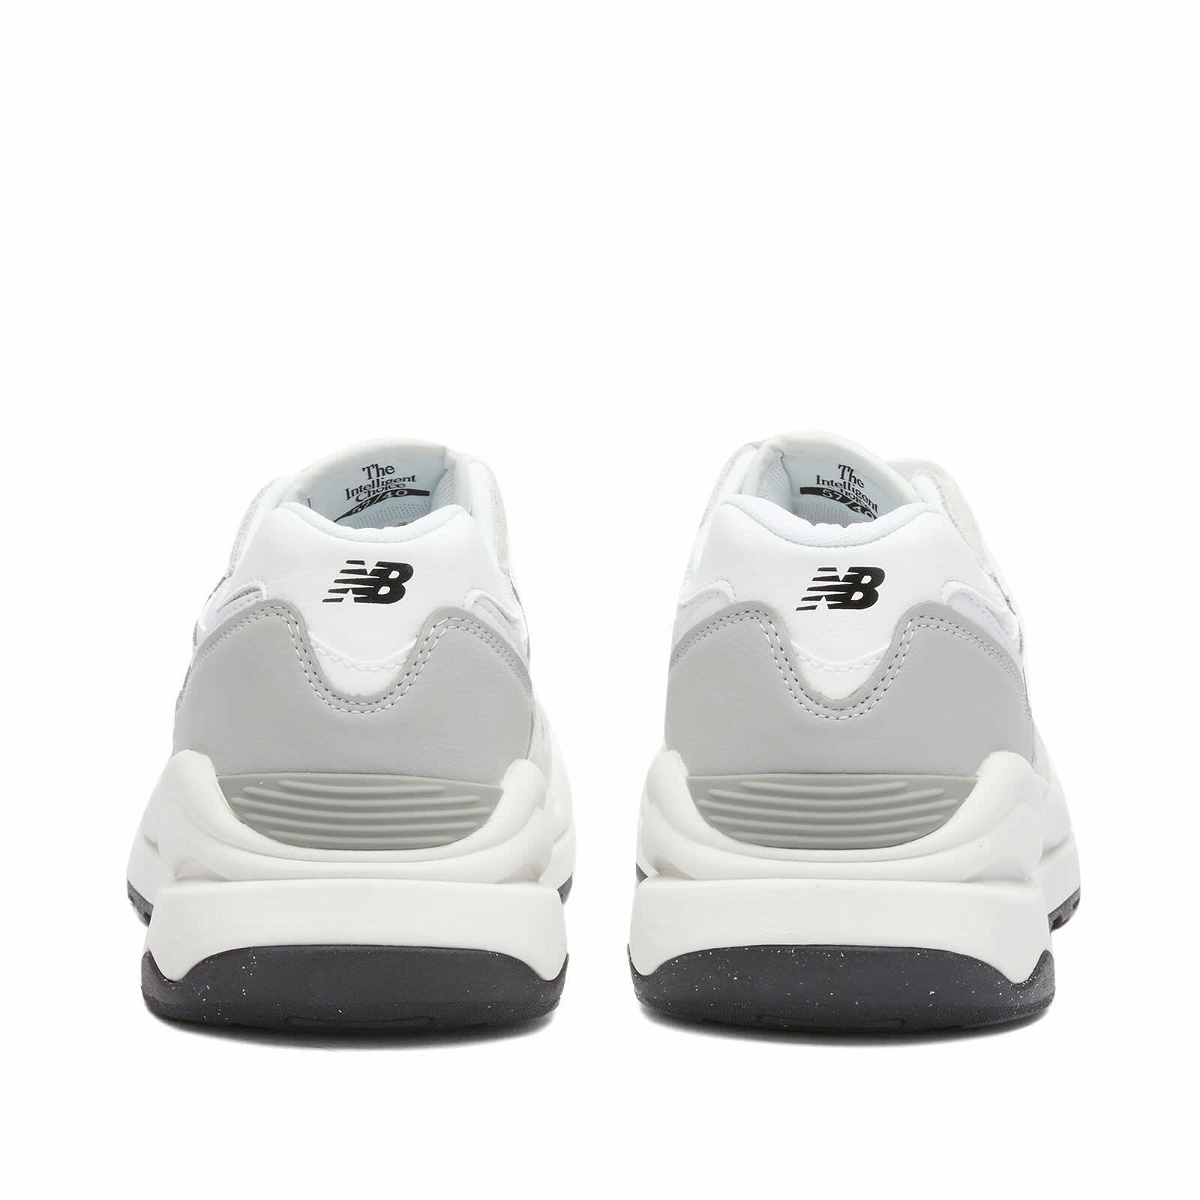 New Balance Men's M5740CPB Sneakers in Concrete